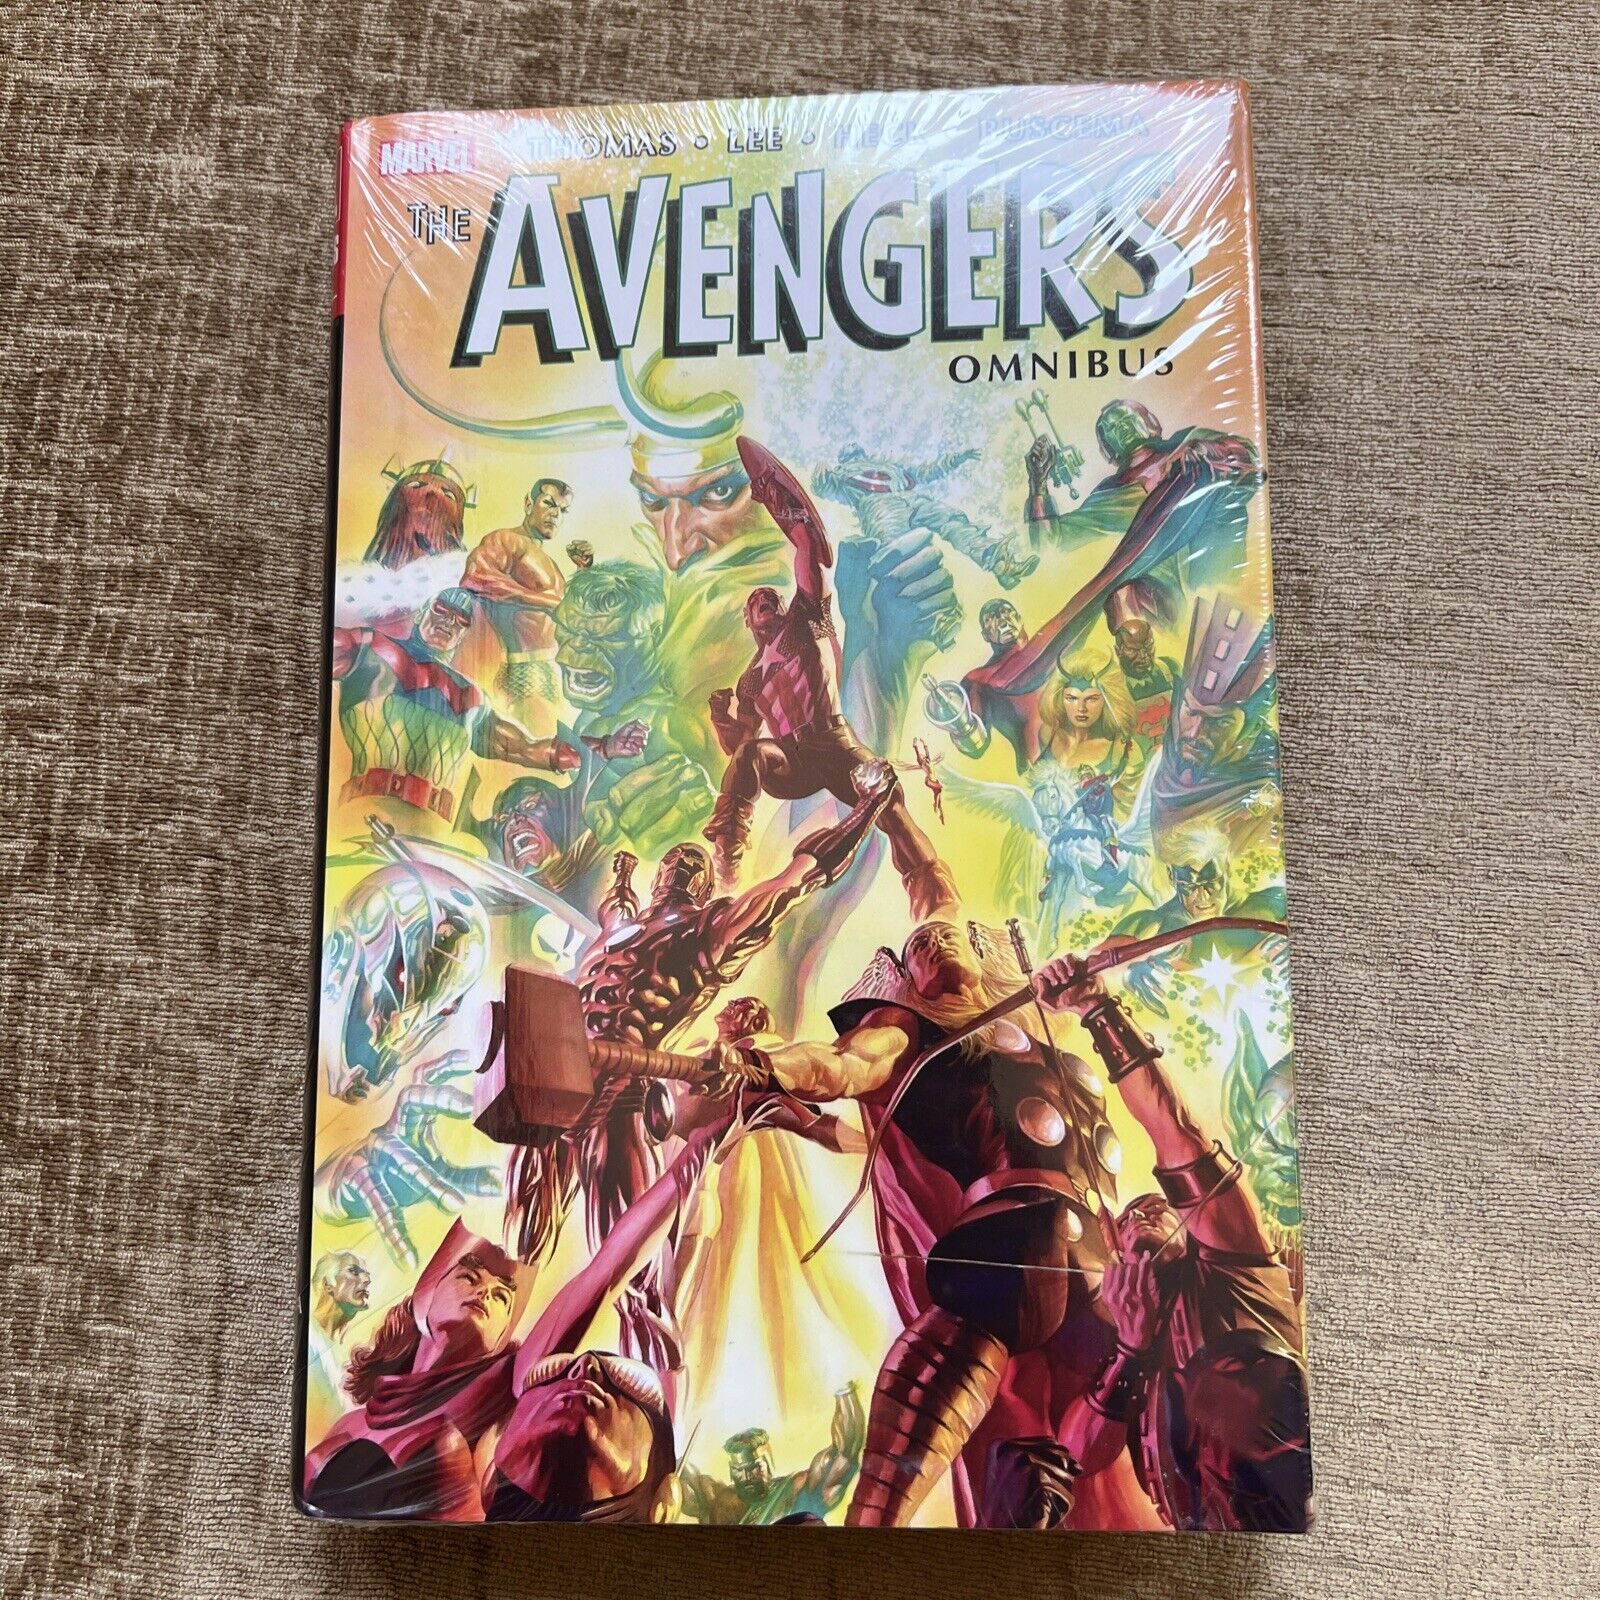 The Avengers Omnibus Vol 2 (Marvel Comics 2015) BRAND NEW